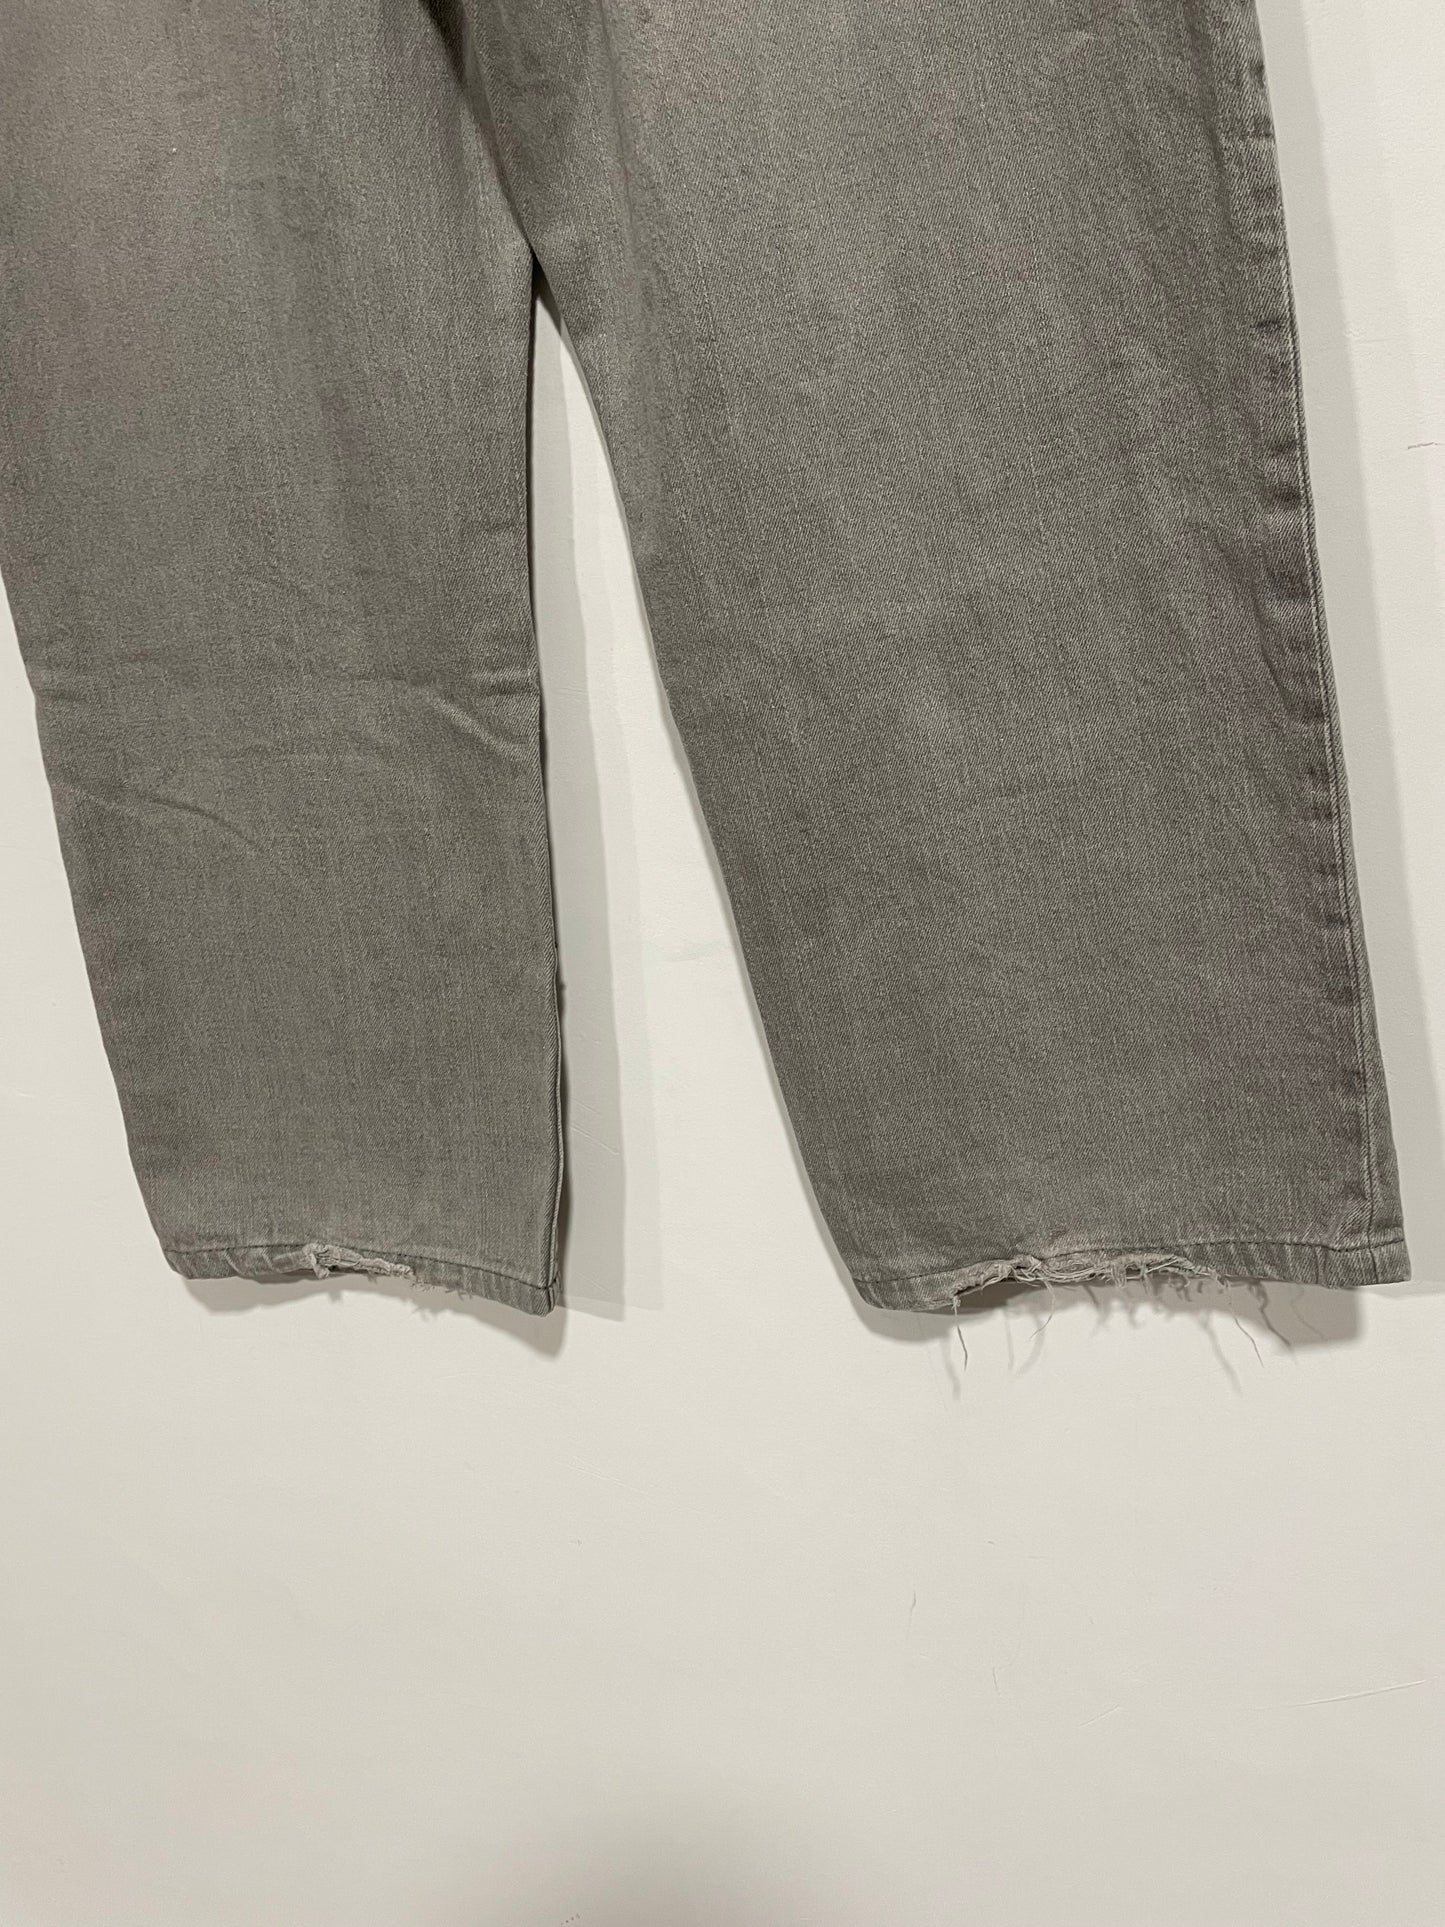 Raro jeans baggy Ecko anni 90 (D403)